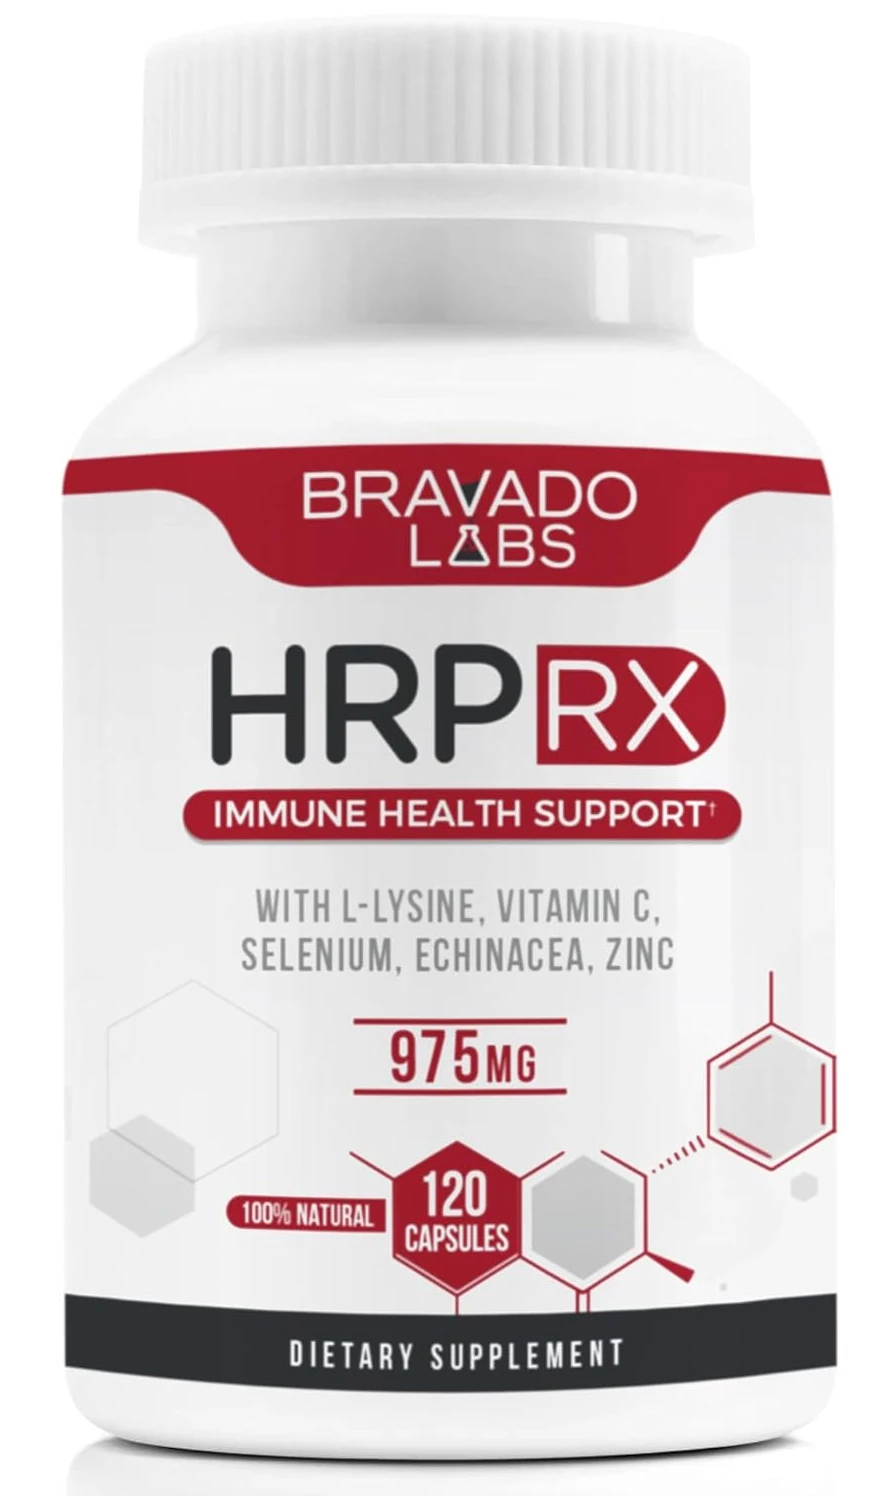 Bravado Labs Premium HRP Supplement - Herpes Outbreak Support with Super Lysine